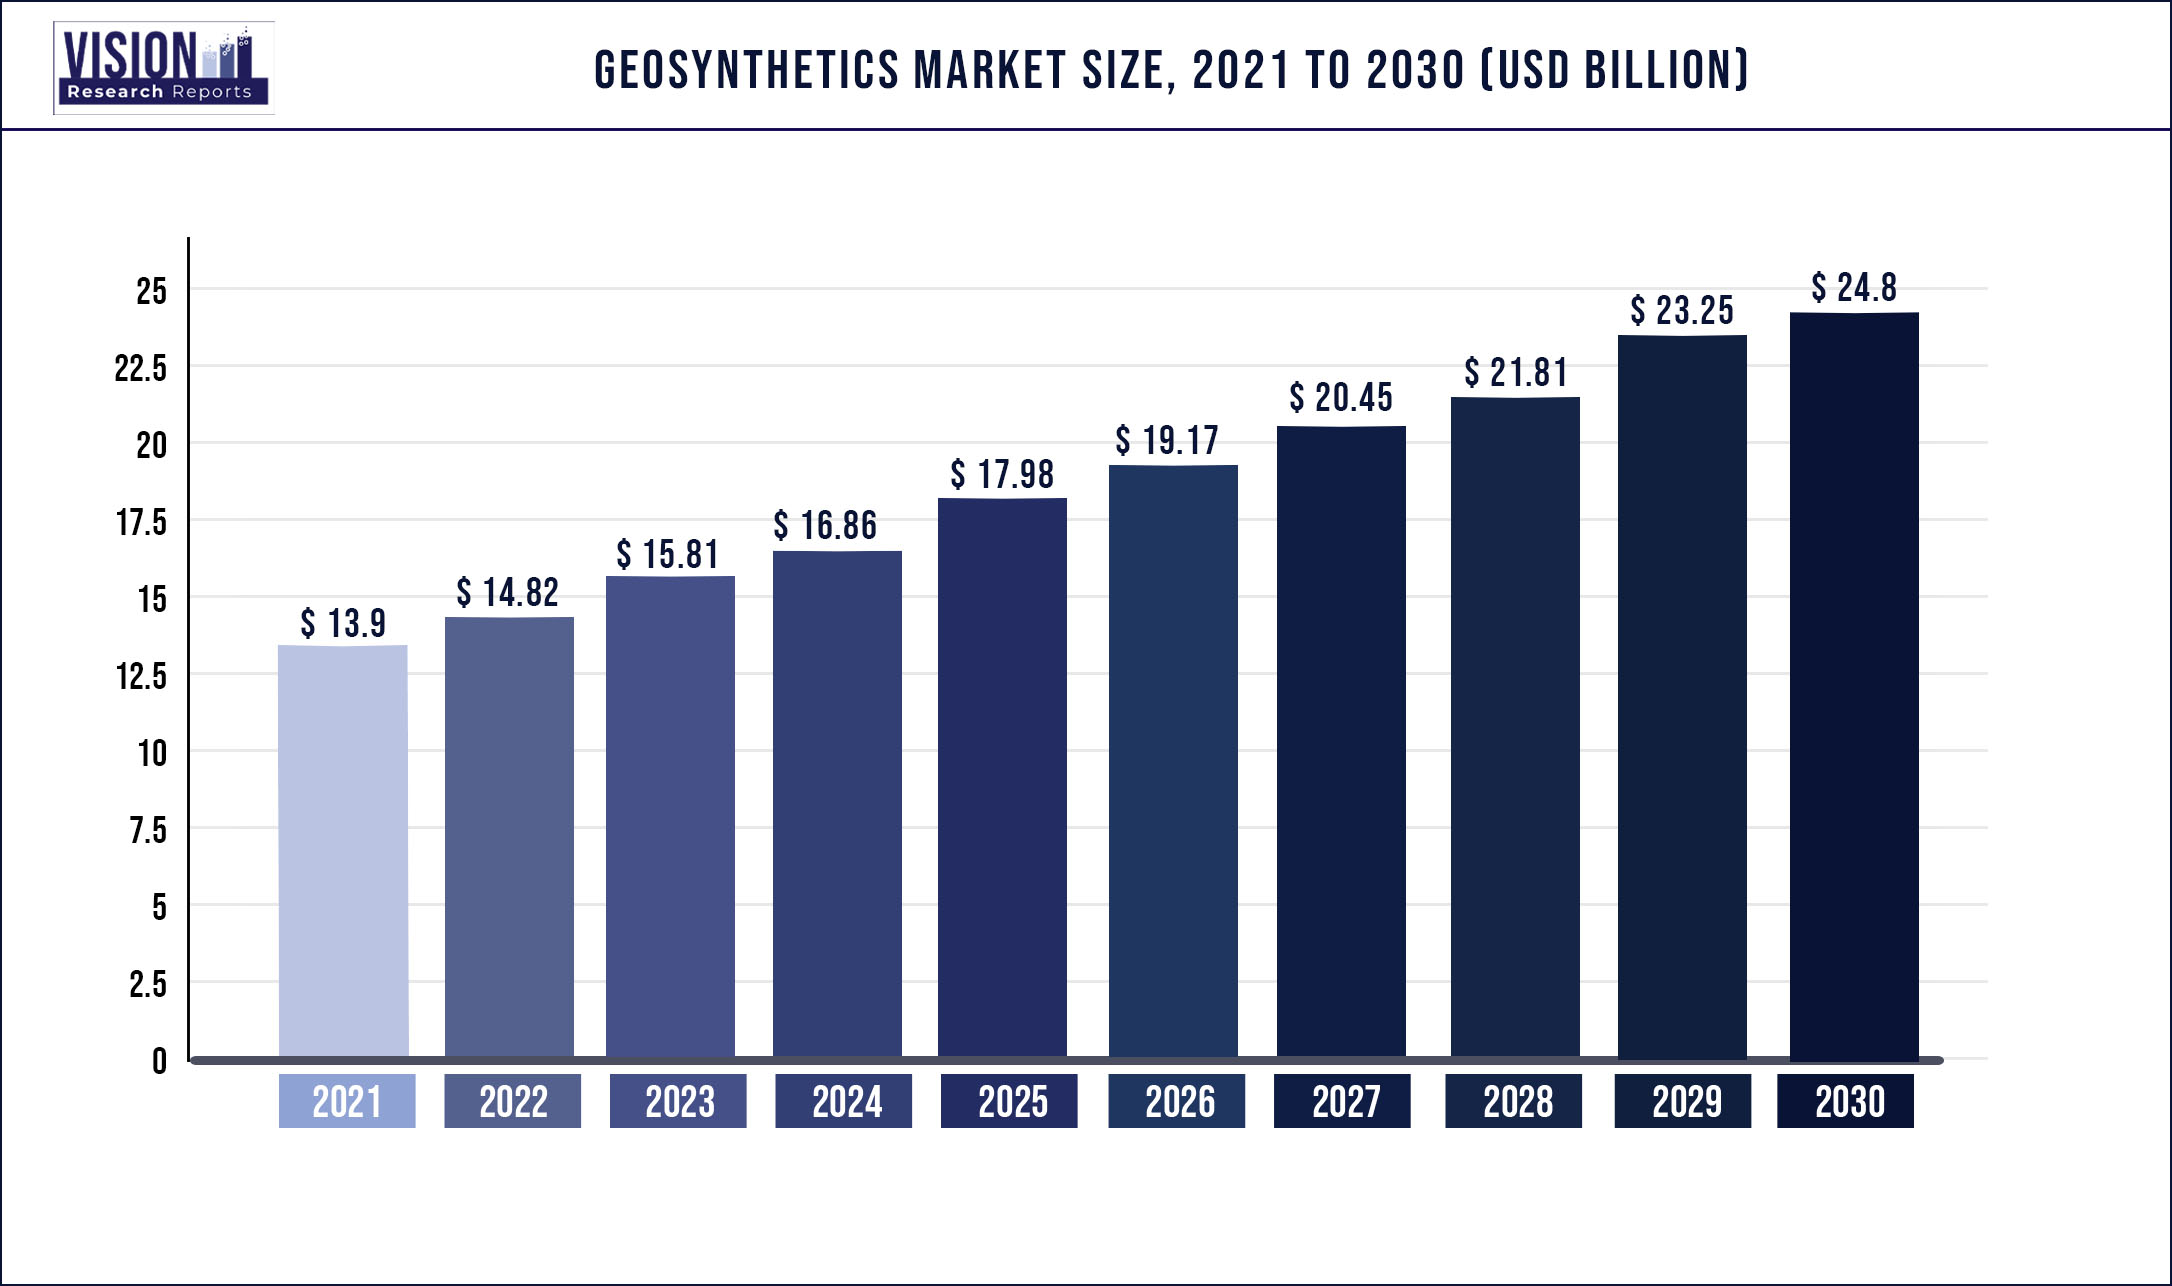 Geosynthetics Market Size 2021 to 2030